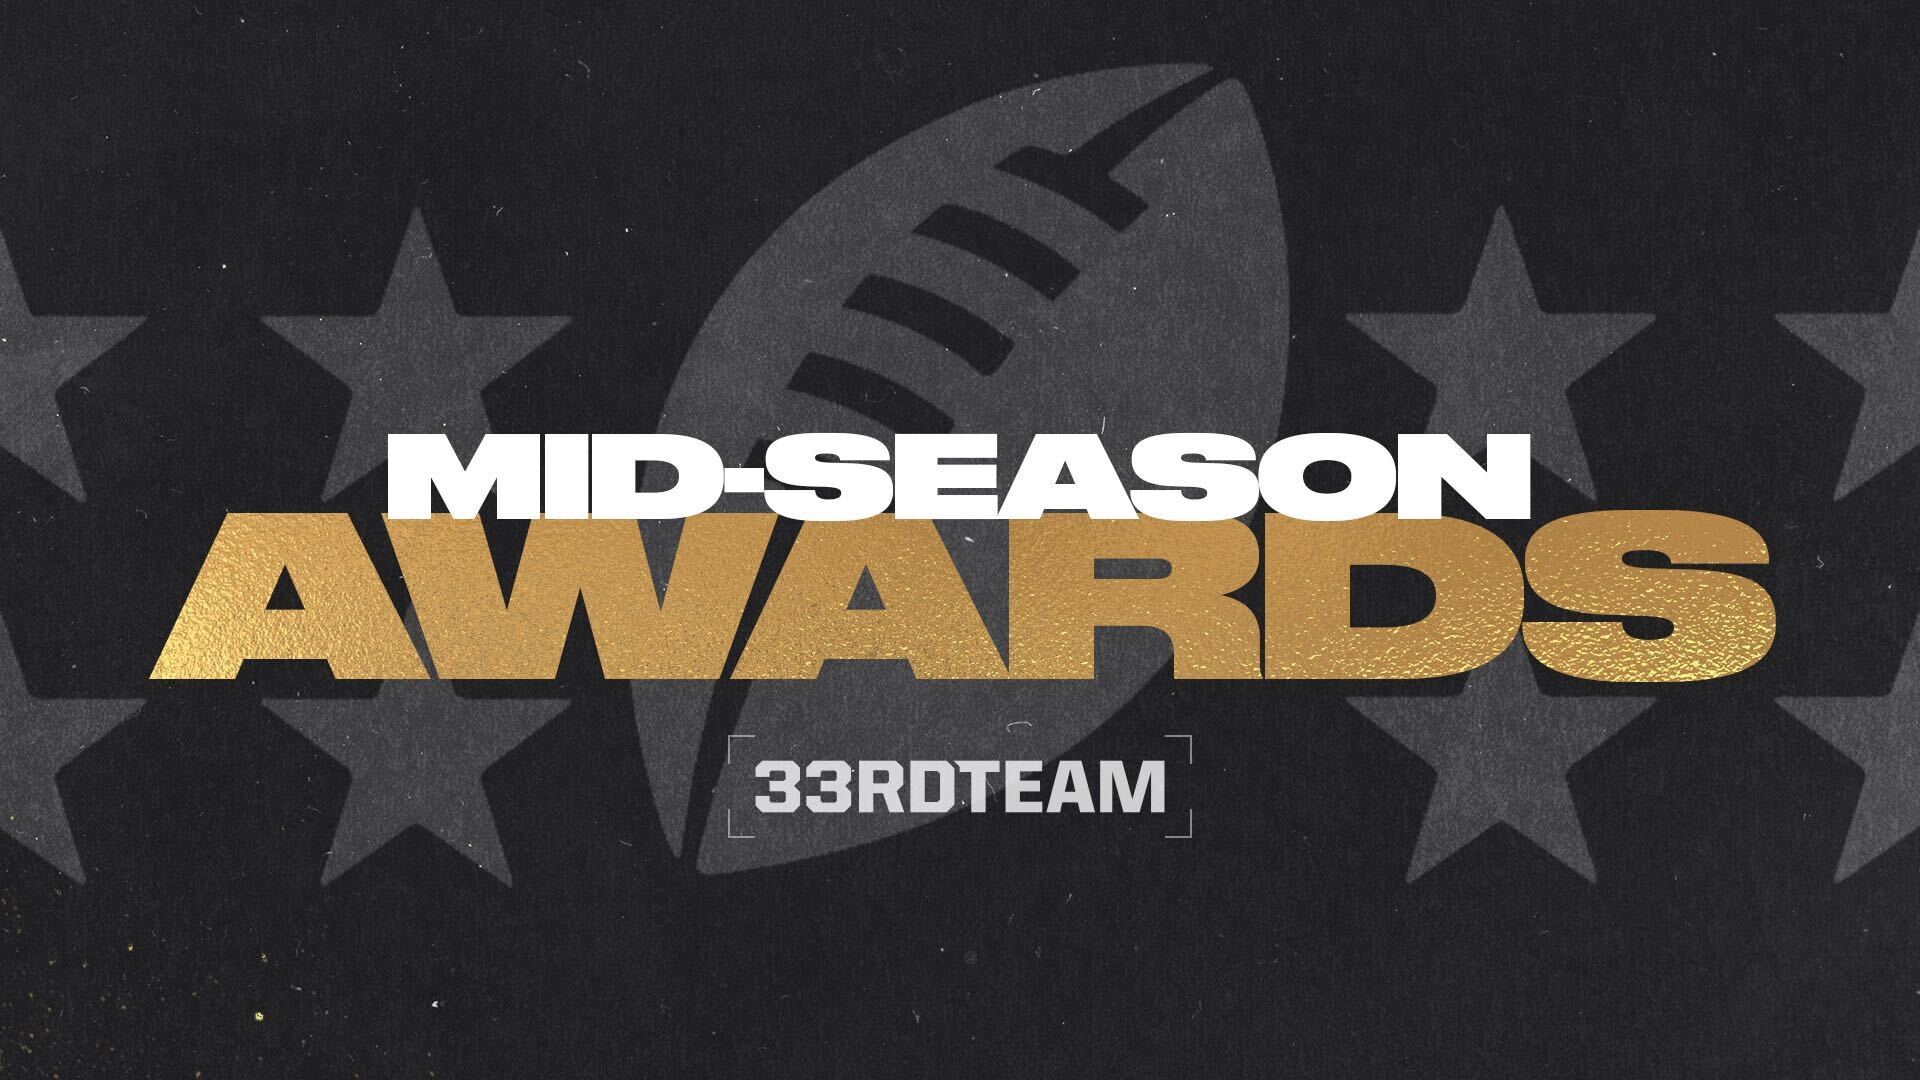 The 33rd Team’s 2022 Midseason NFL Awards